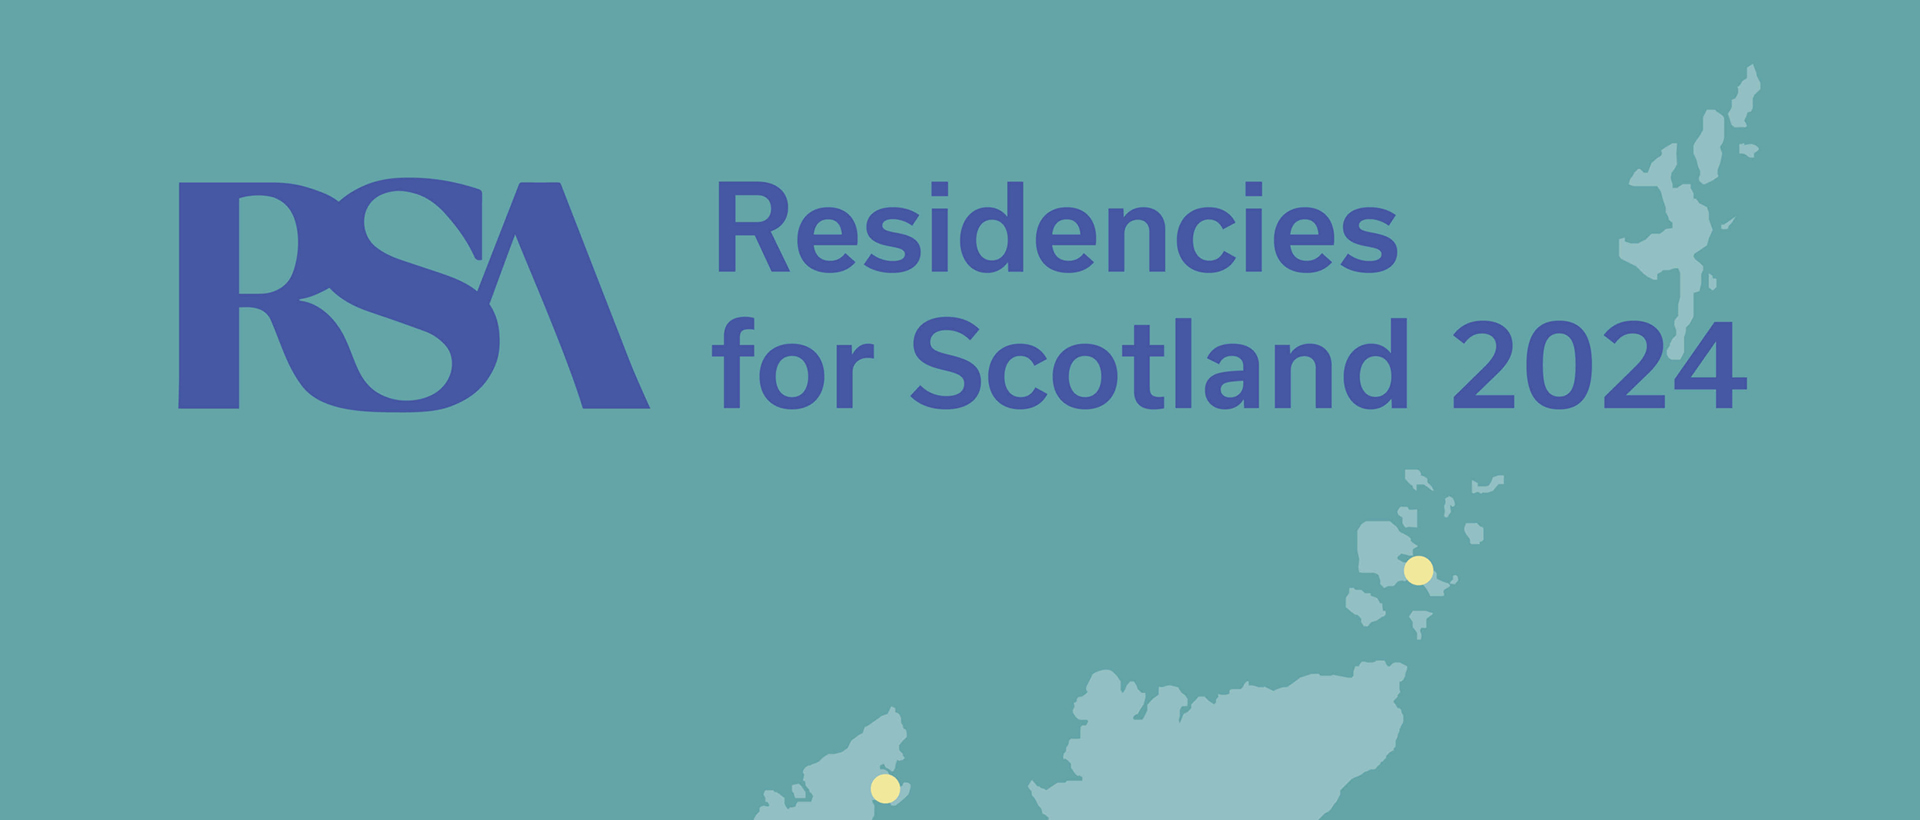 RSA Residencies for Scotland 2024